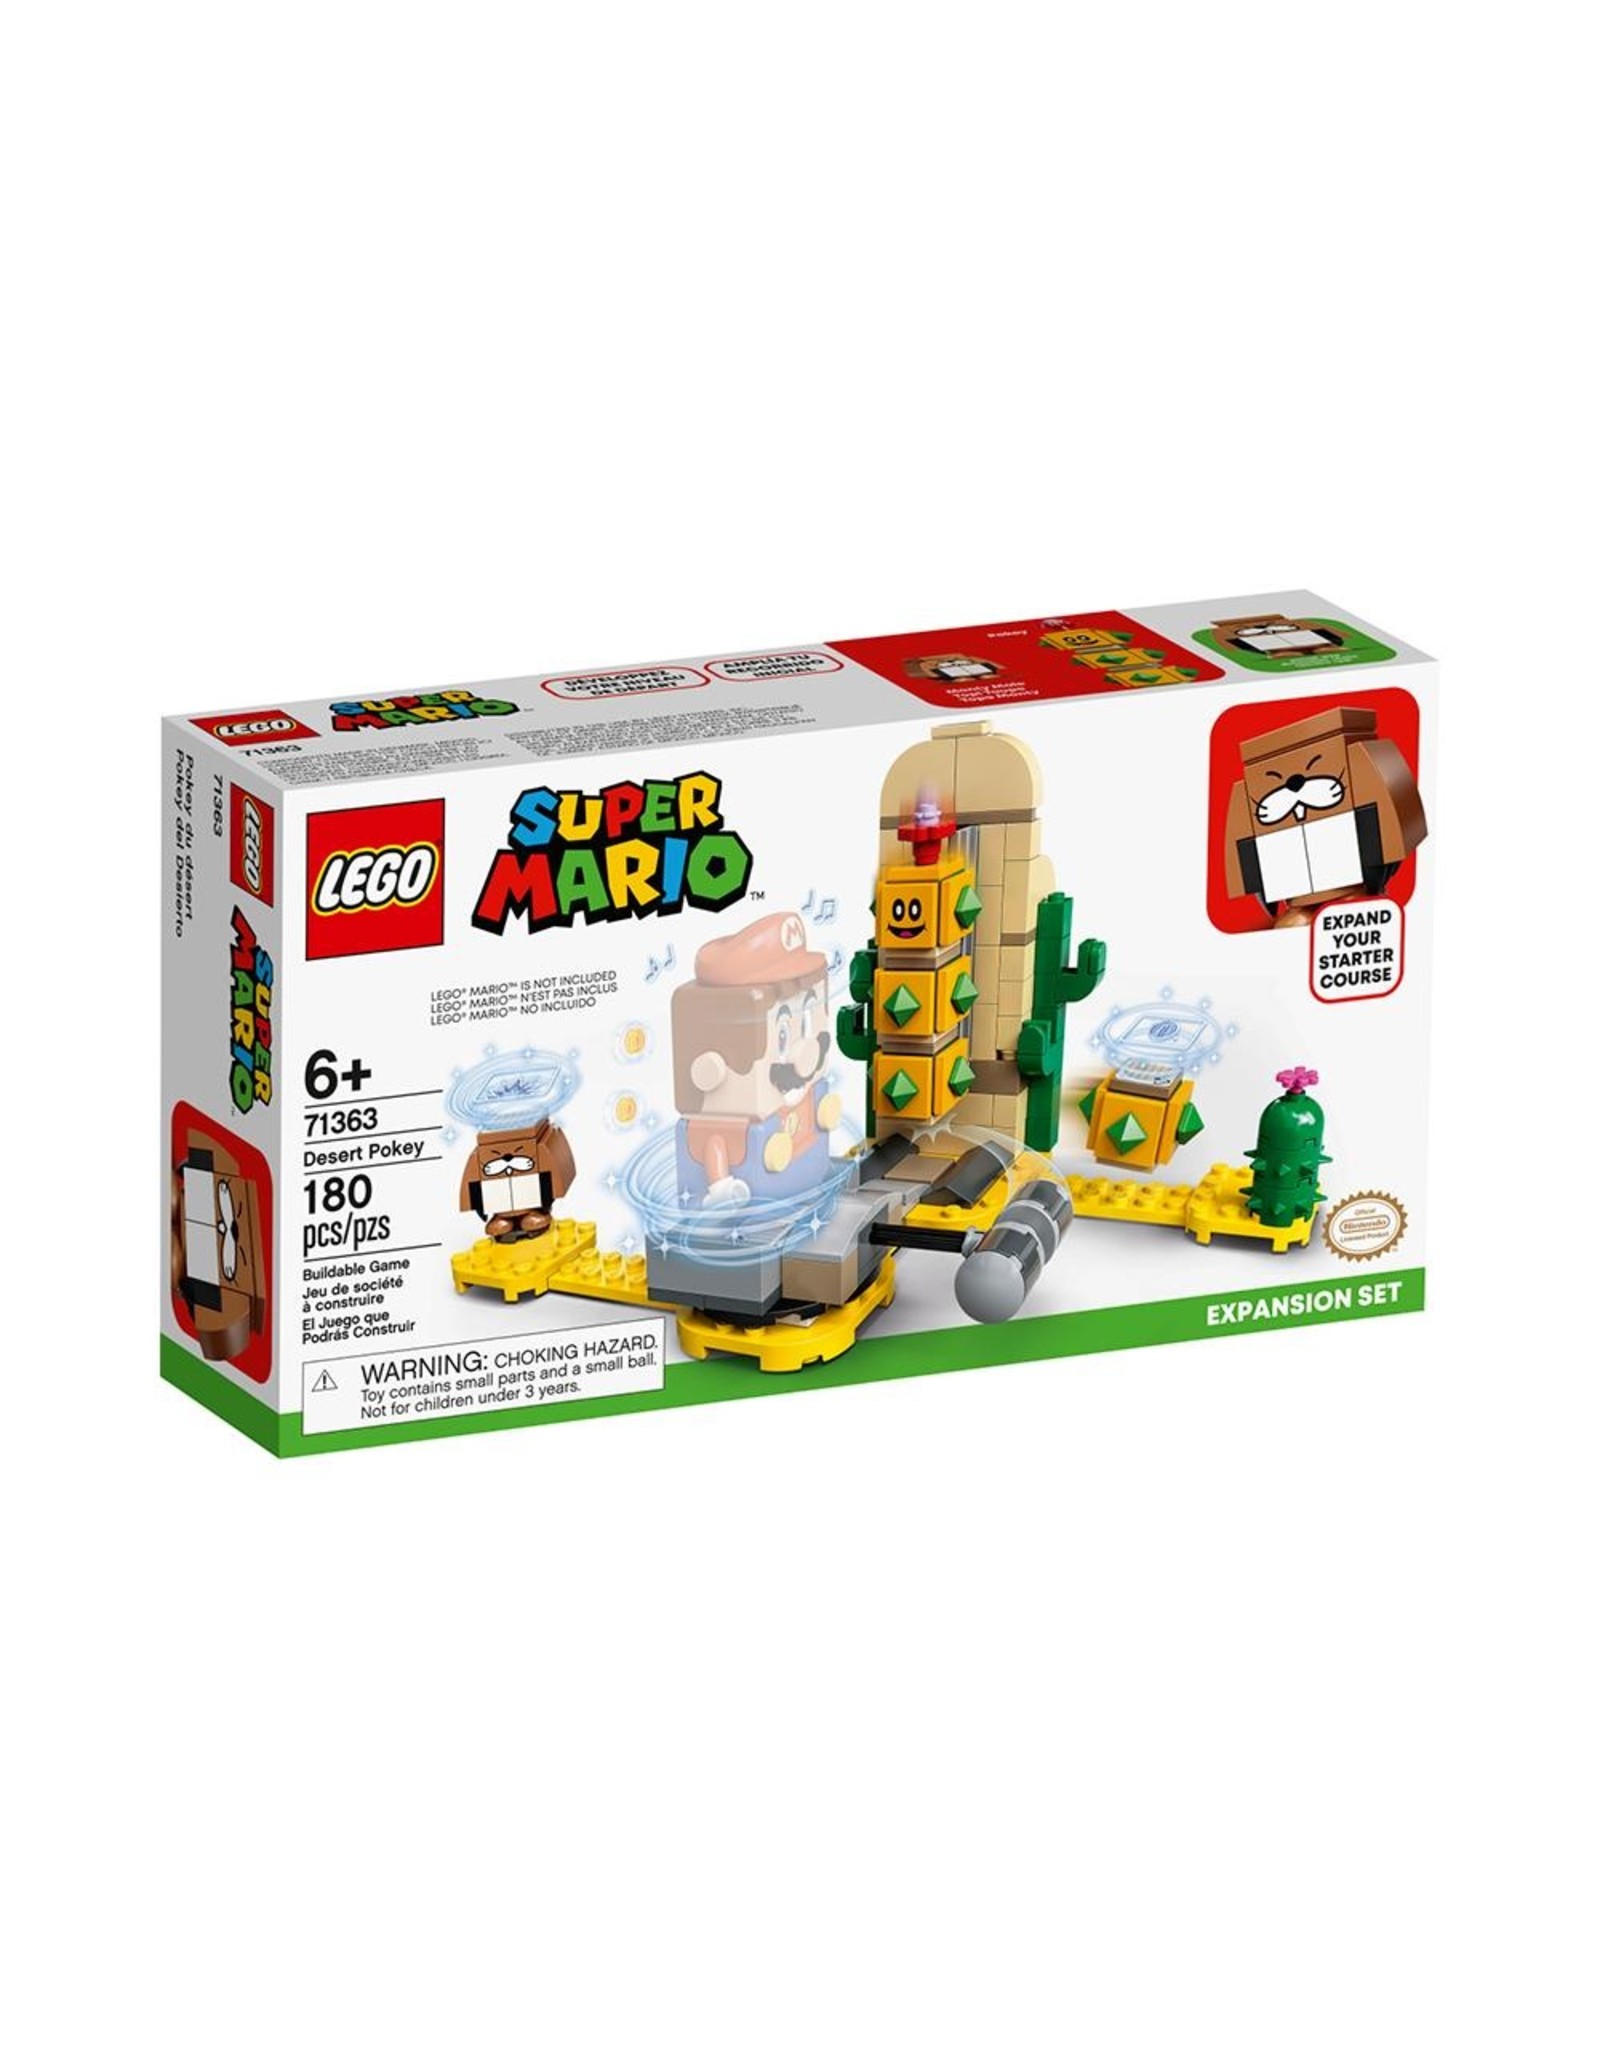 LEGO Super Mario - 71363 - Desert Pokey Expansion Set